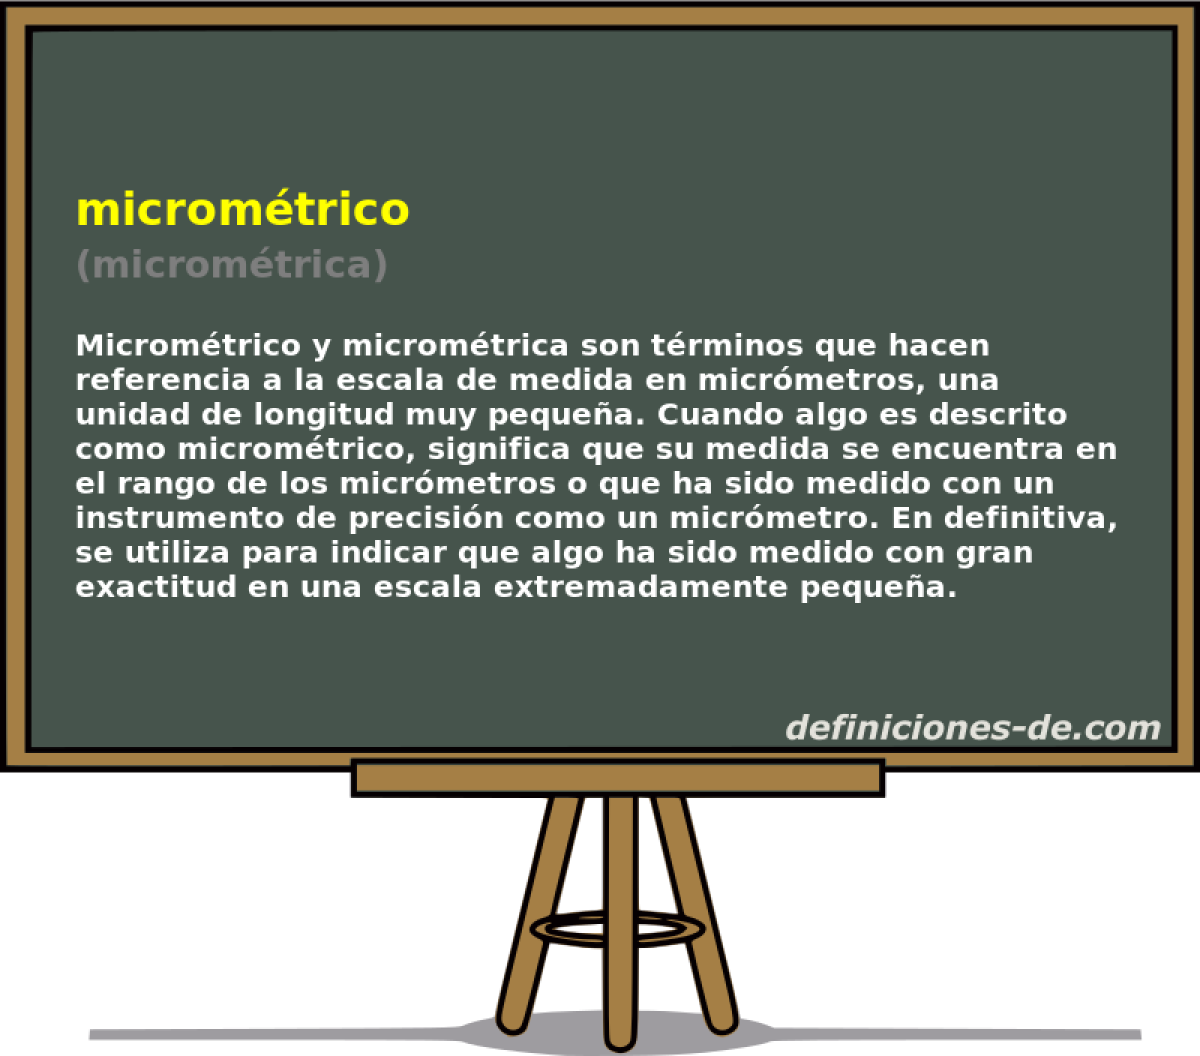 micromtrico (micromtrica)